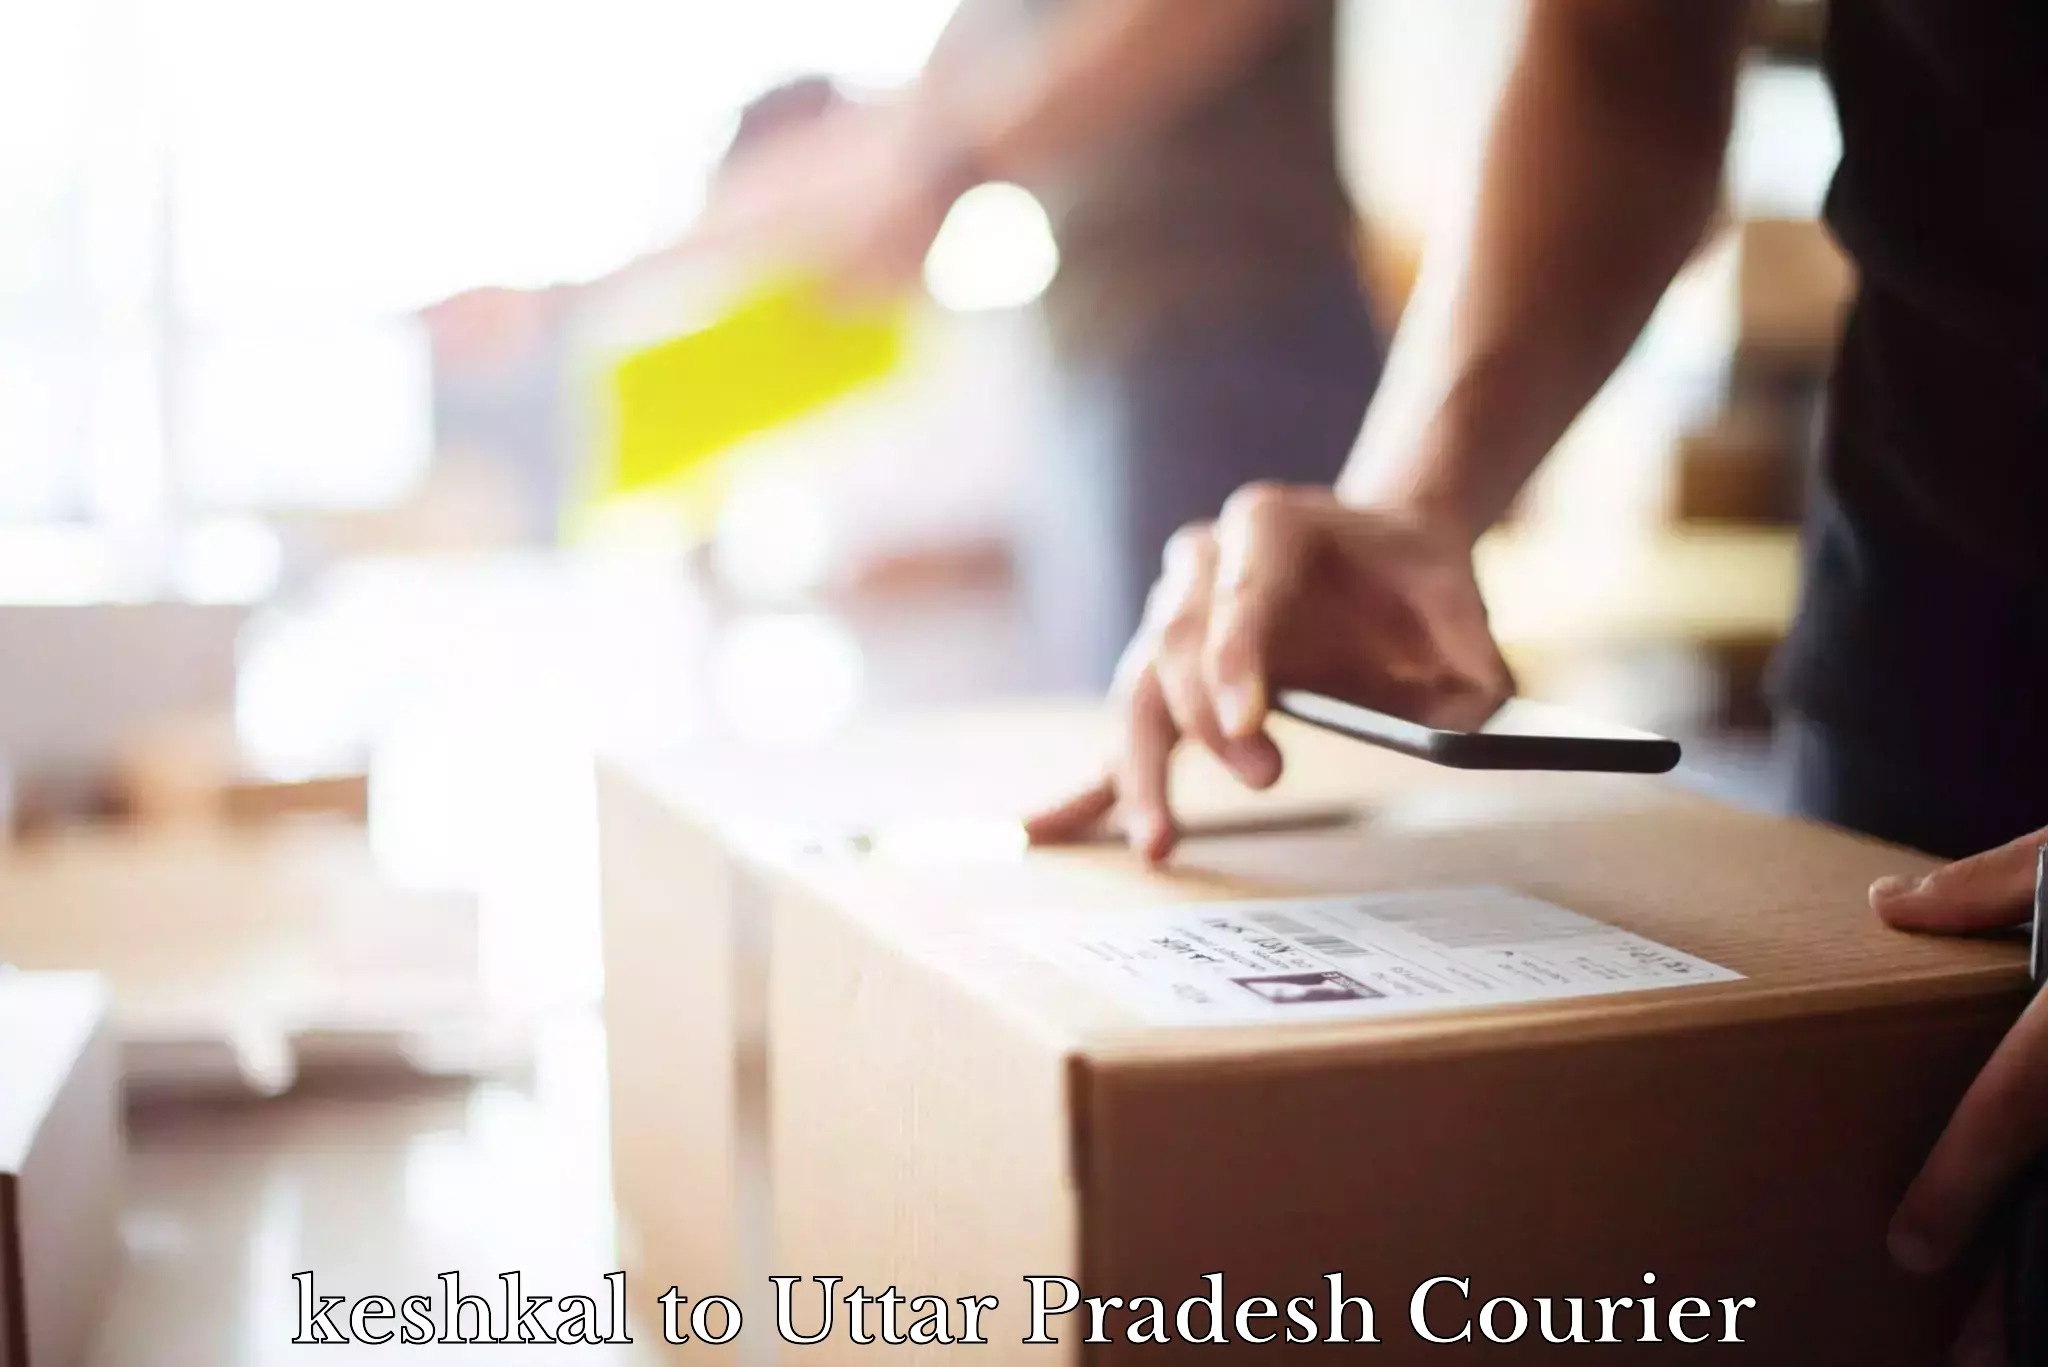 User-friendly delivery service keshkal to Aligarh Muslim University